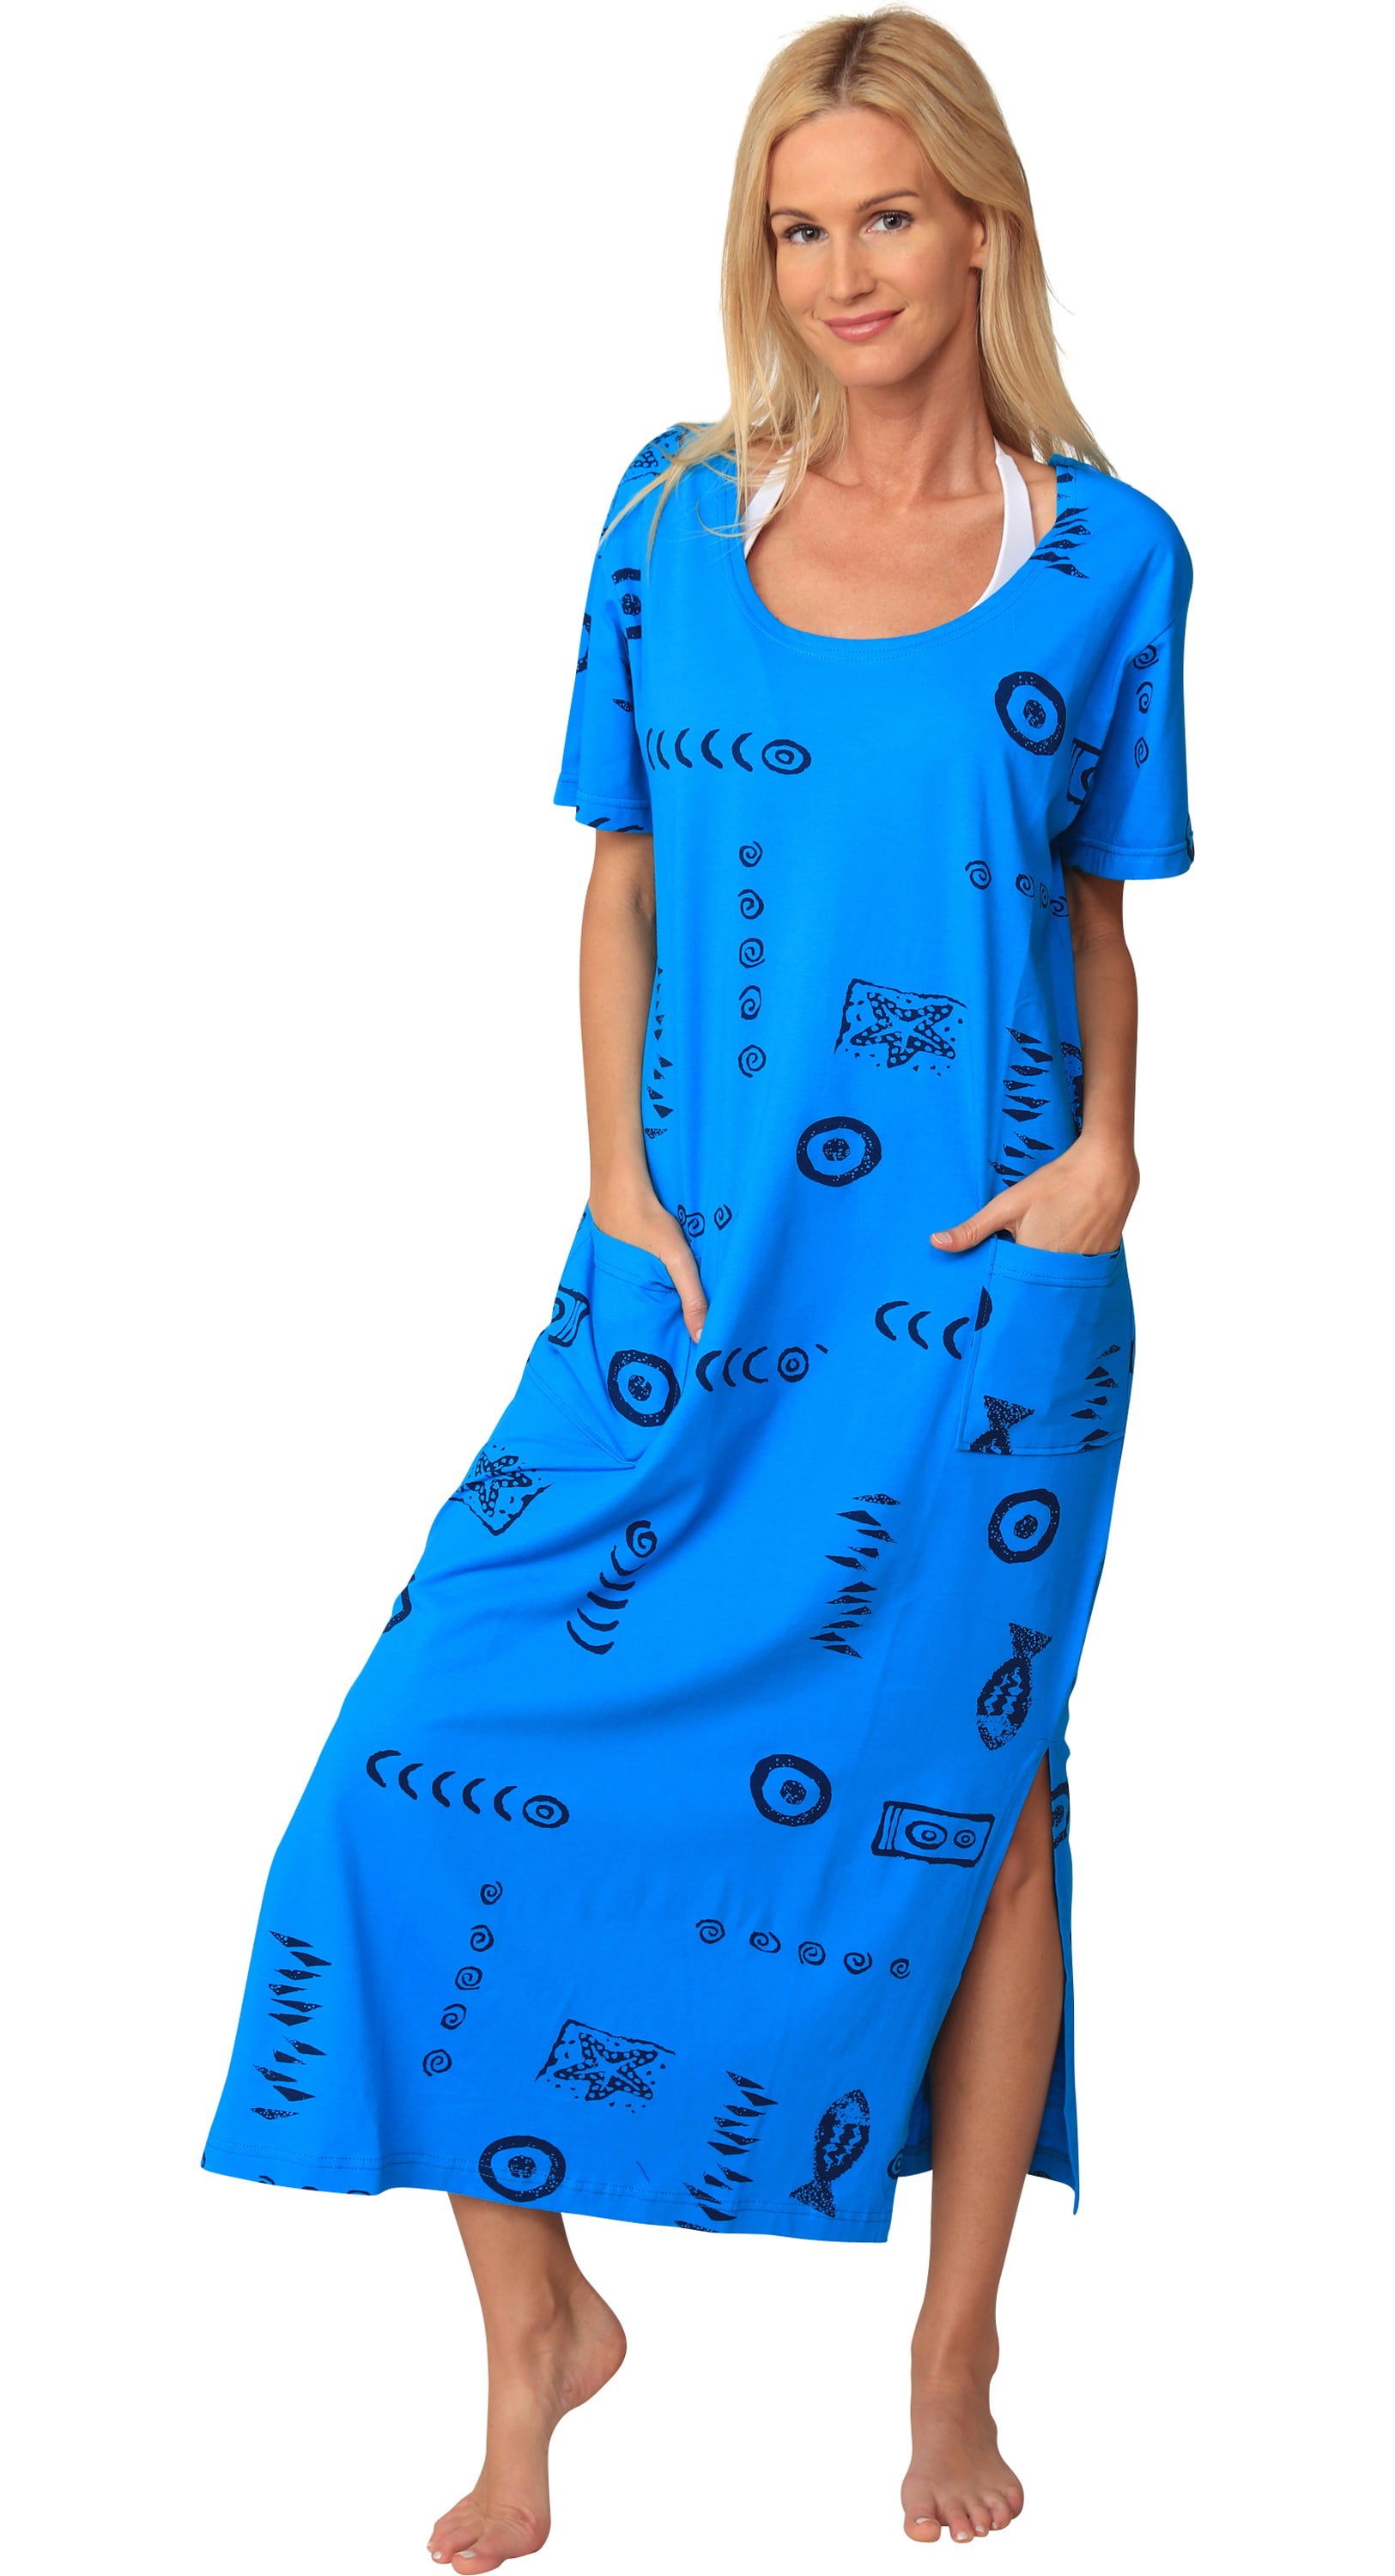 InGear - Ingear Cotton Dress Long Casual Beach Summer Fashion Sleeve ...